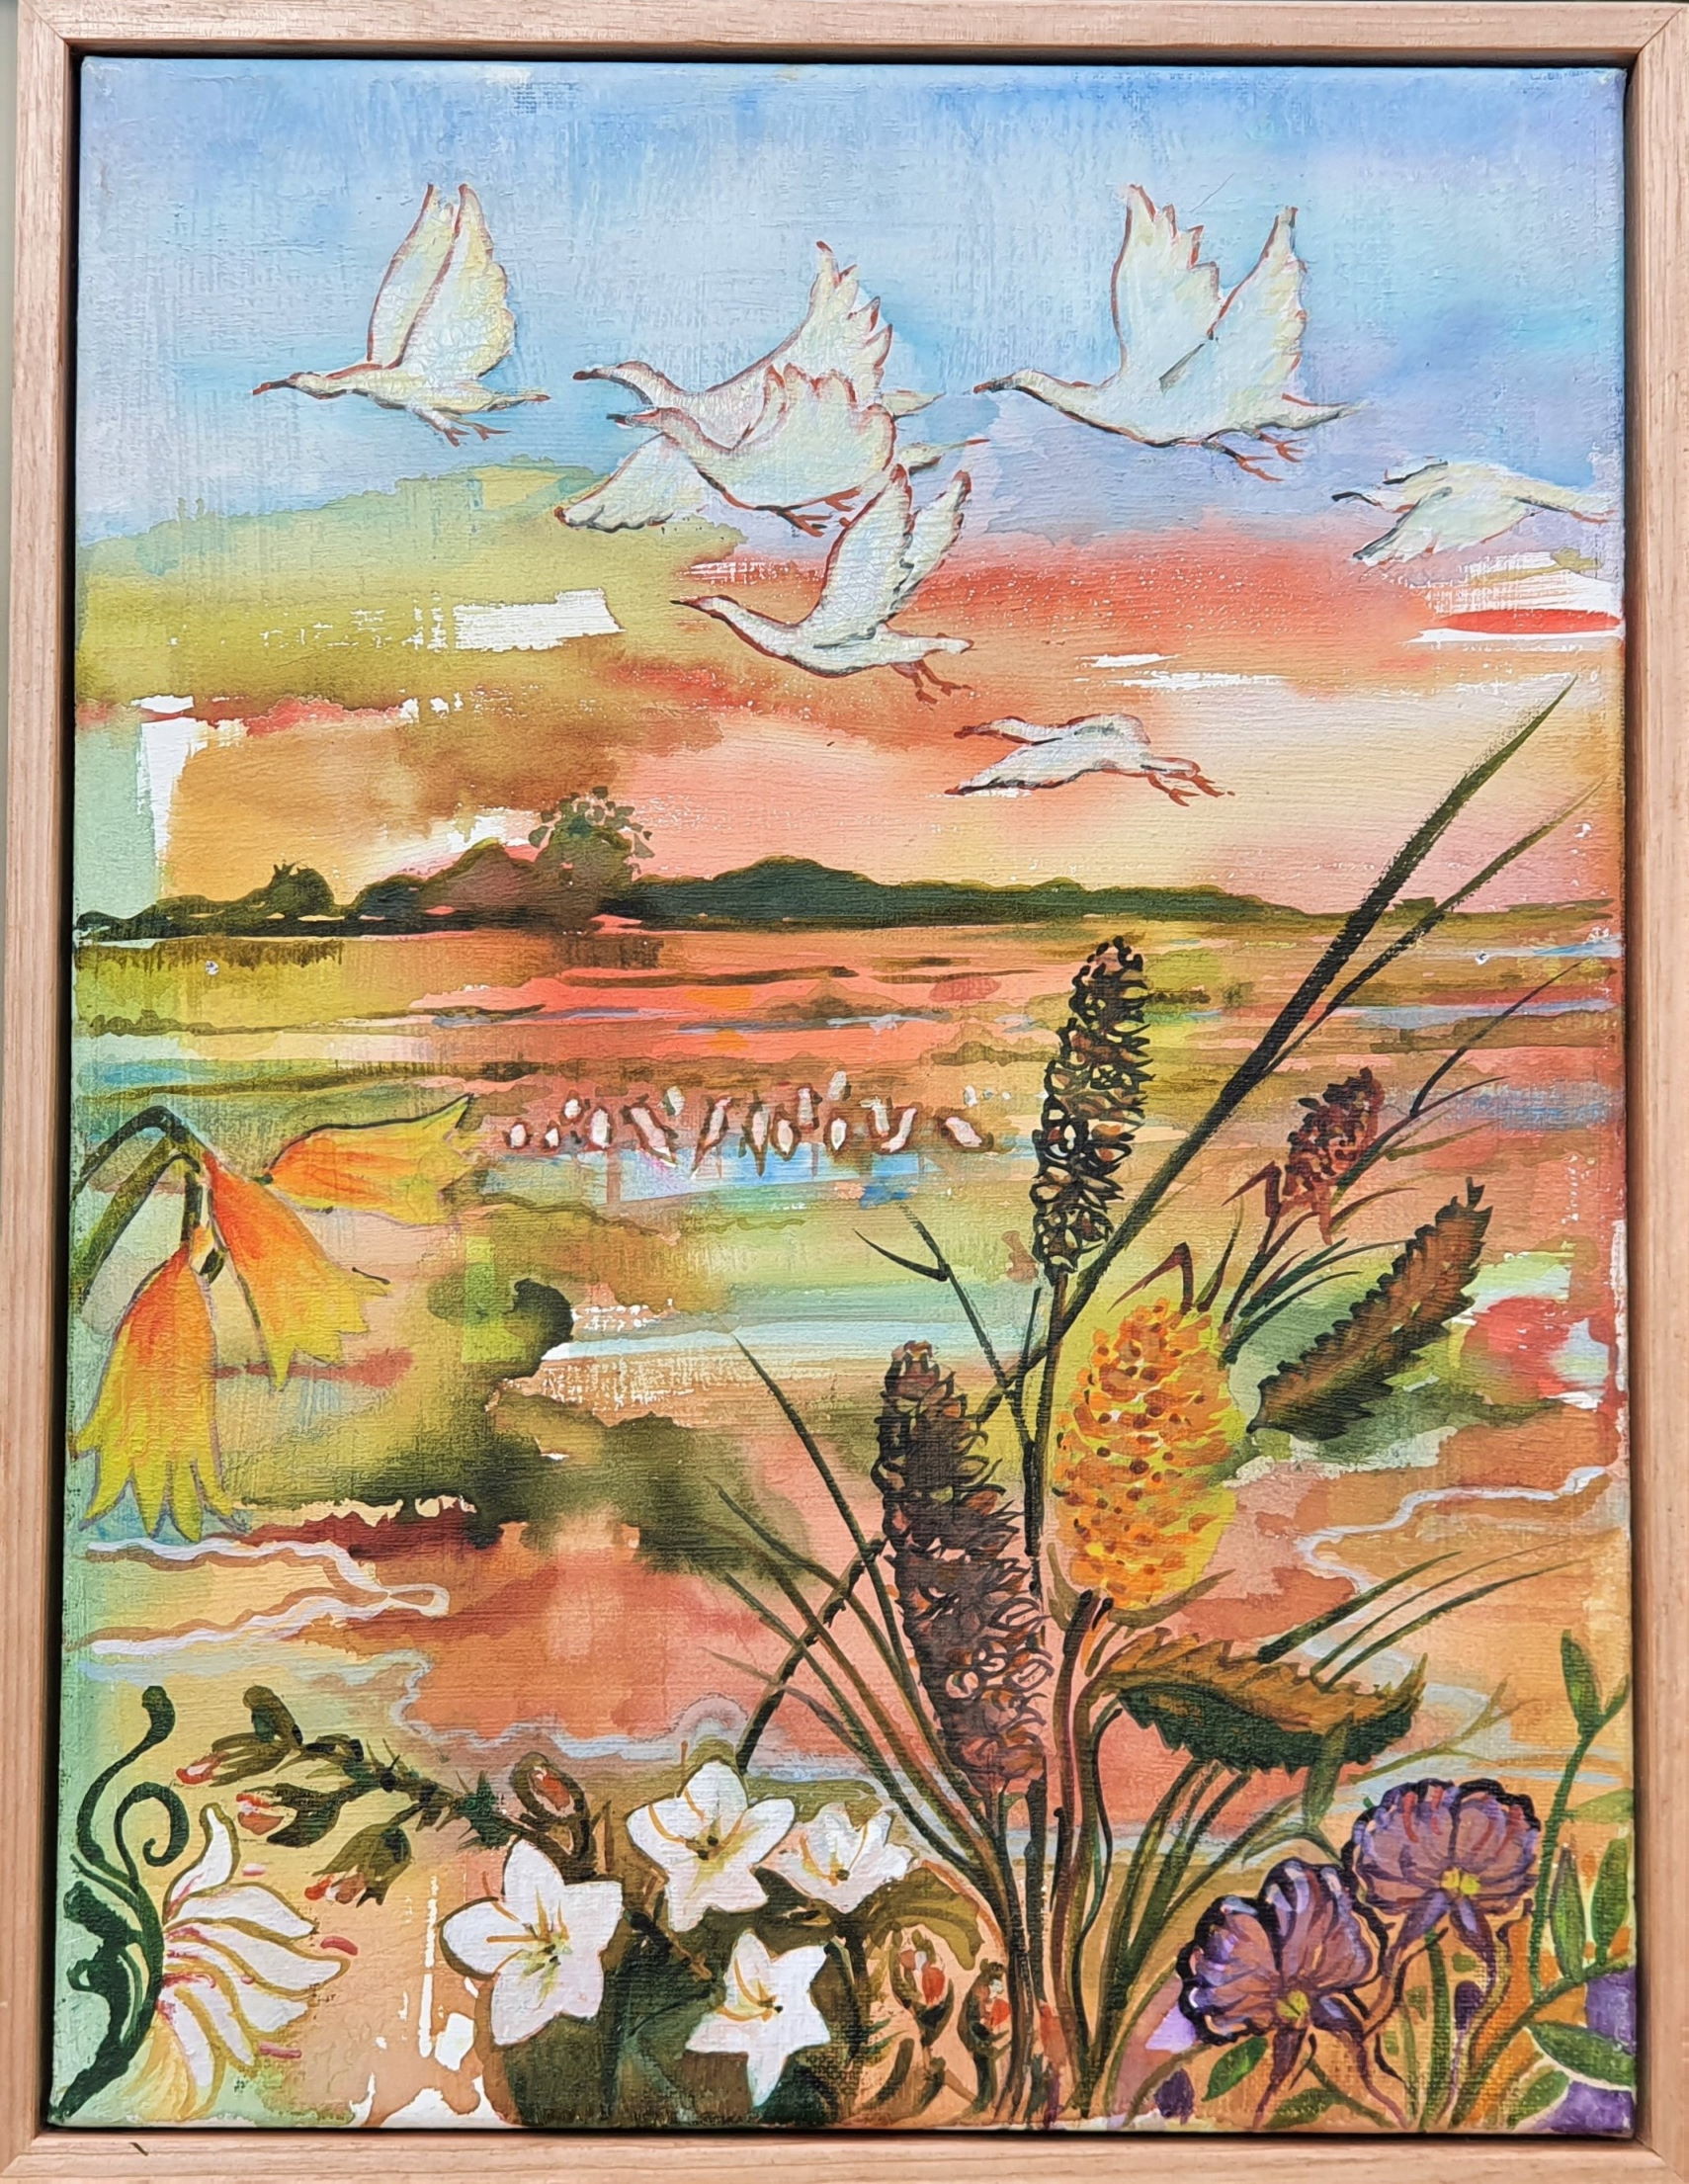 Spoonbills and Wildflowers by Zela Bissett | Lethbridge 20000 2021 Finalists | Lethbridge Gallery